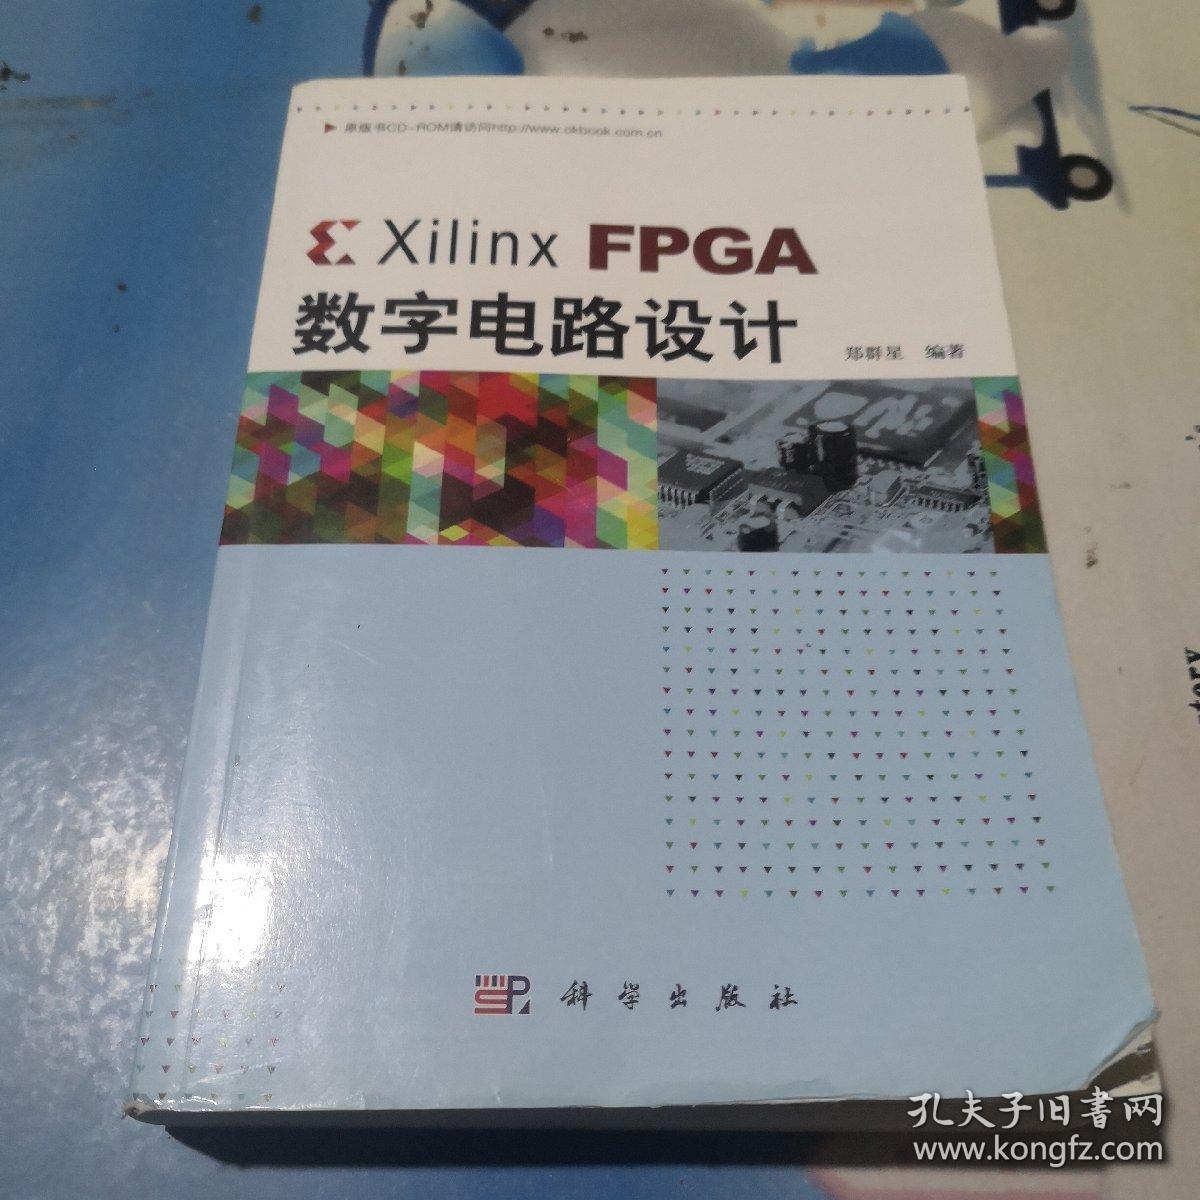 Xilinx FPGA数字电路设计